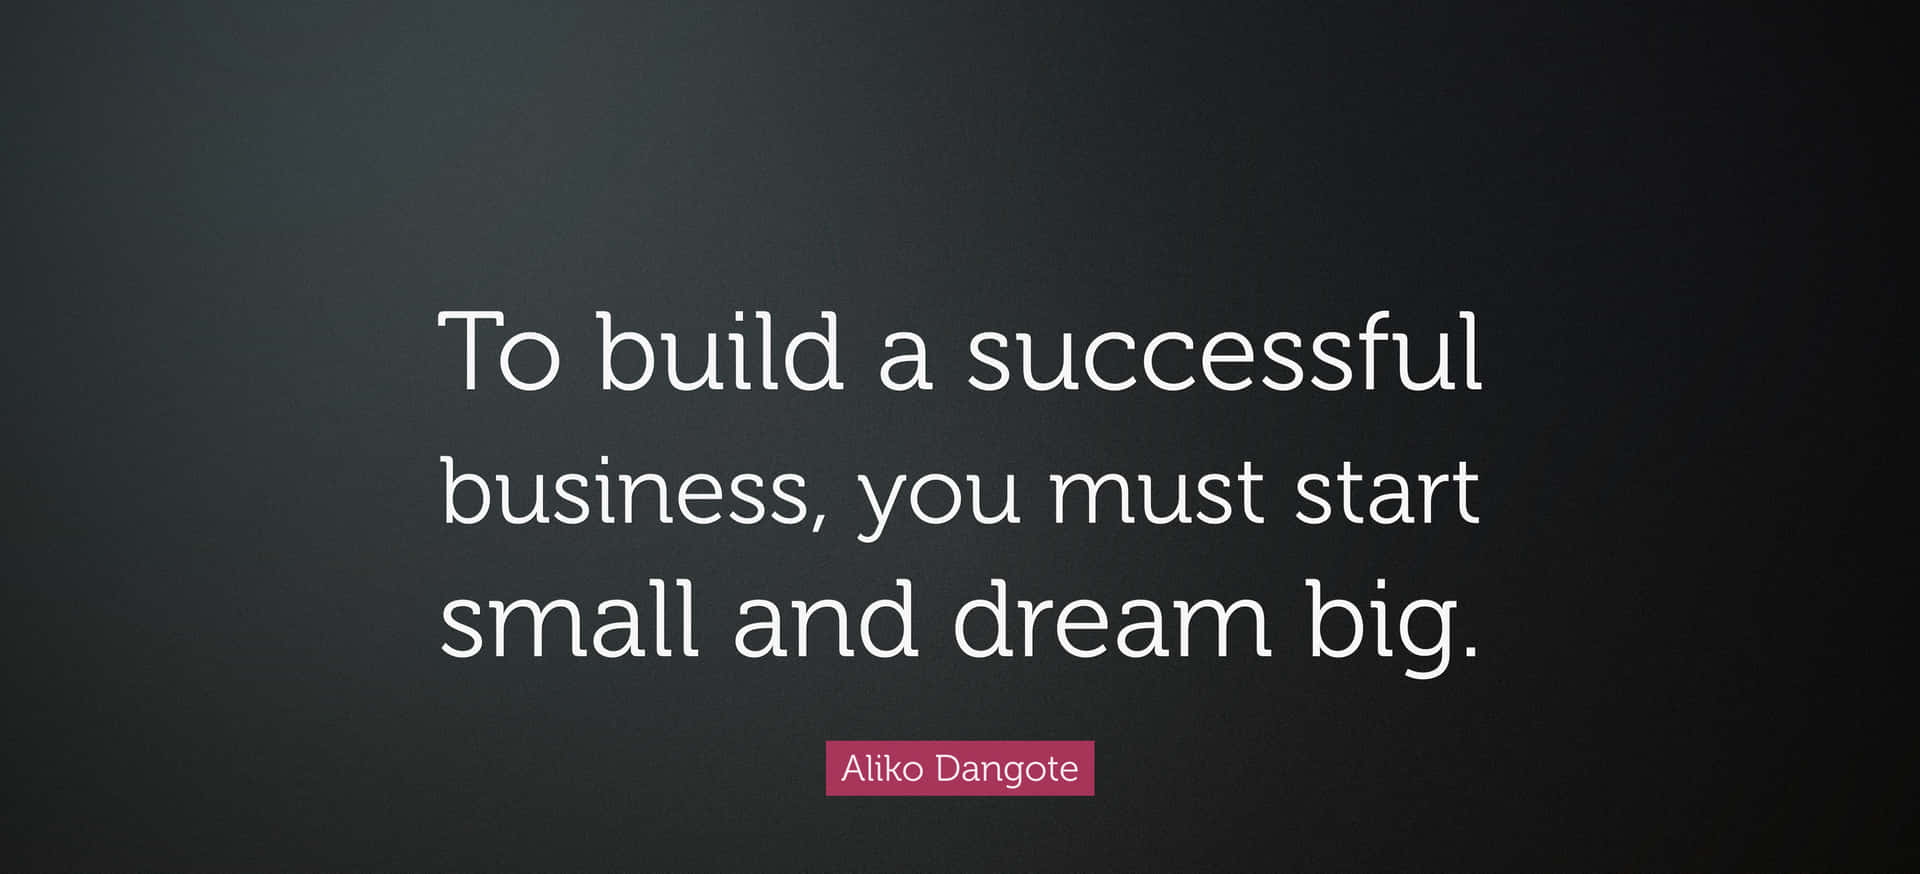 Success Business Quote Dangote Wallpaper